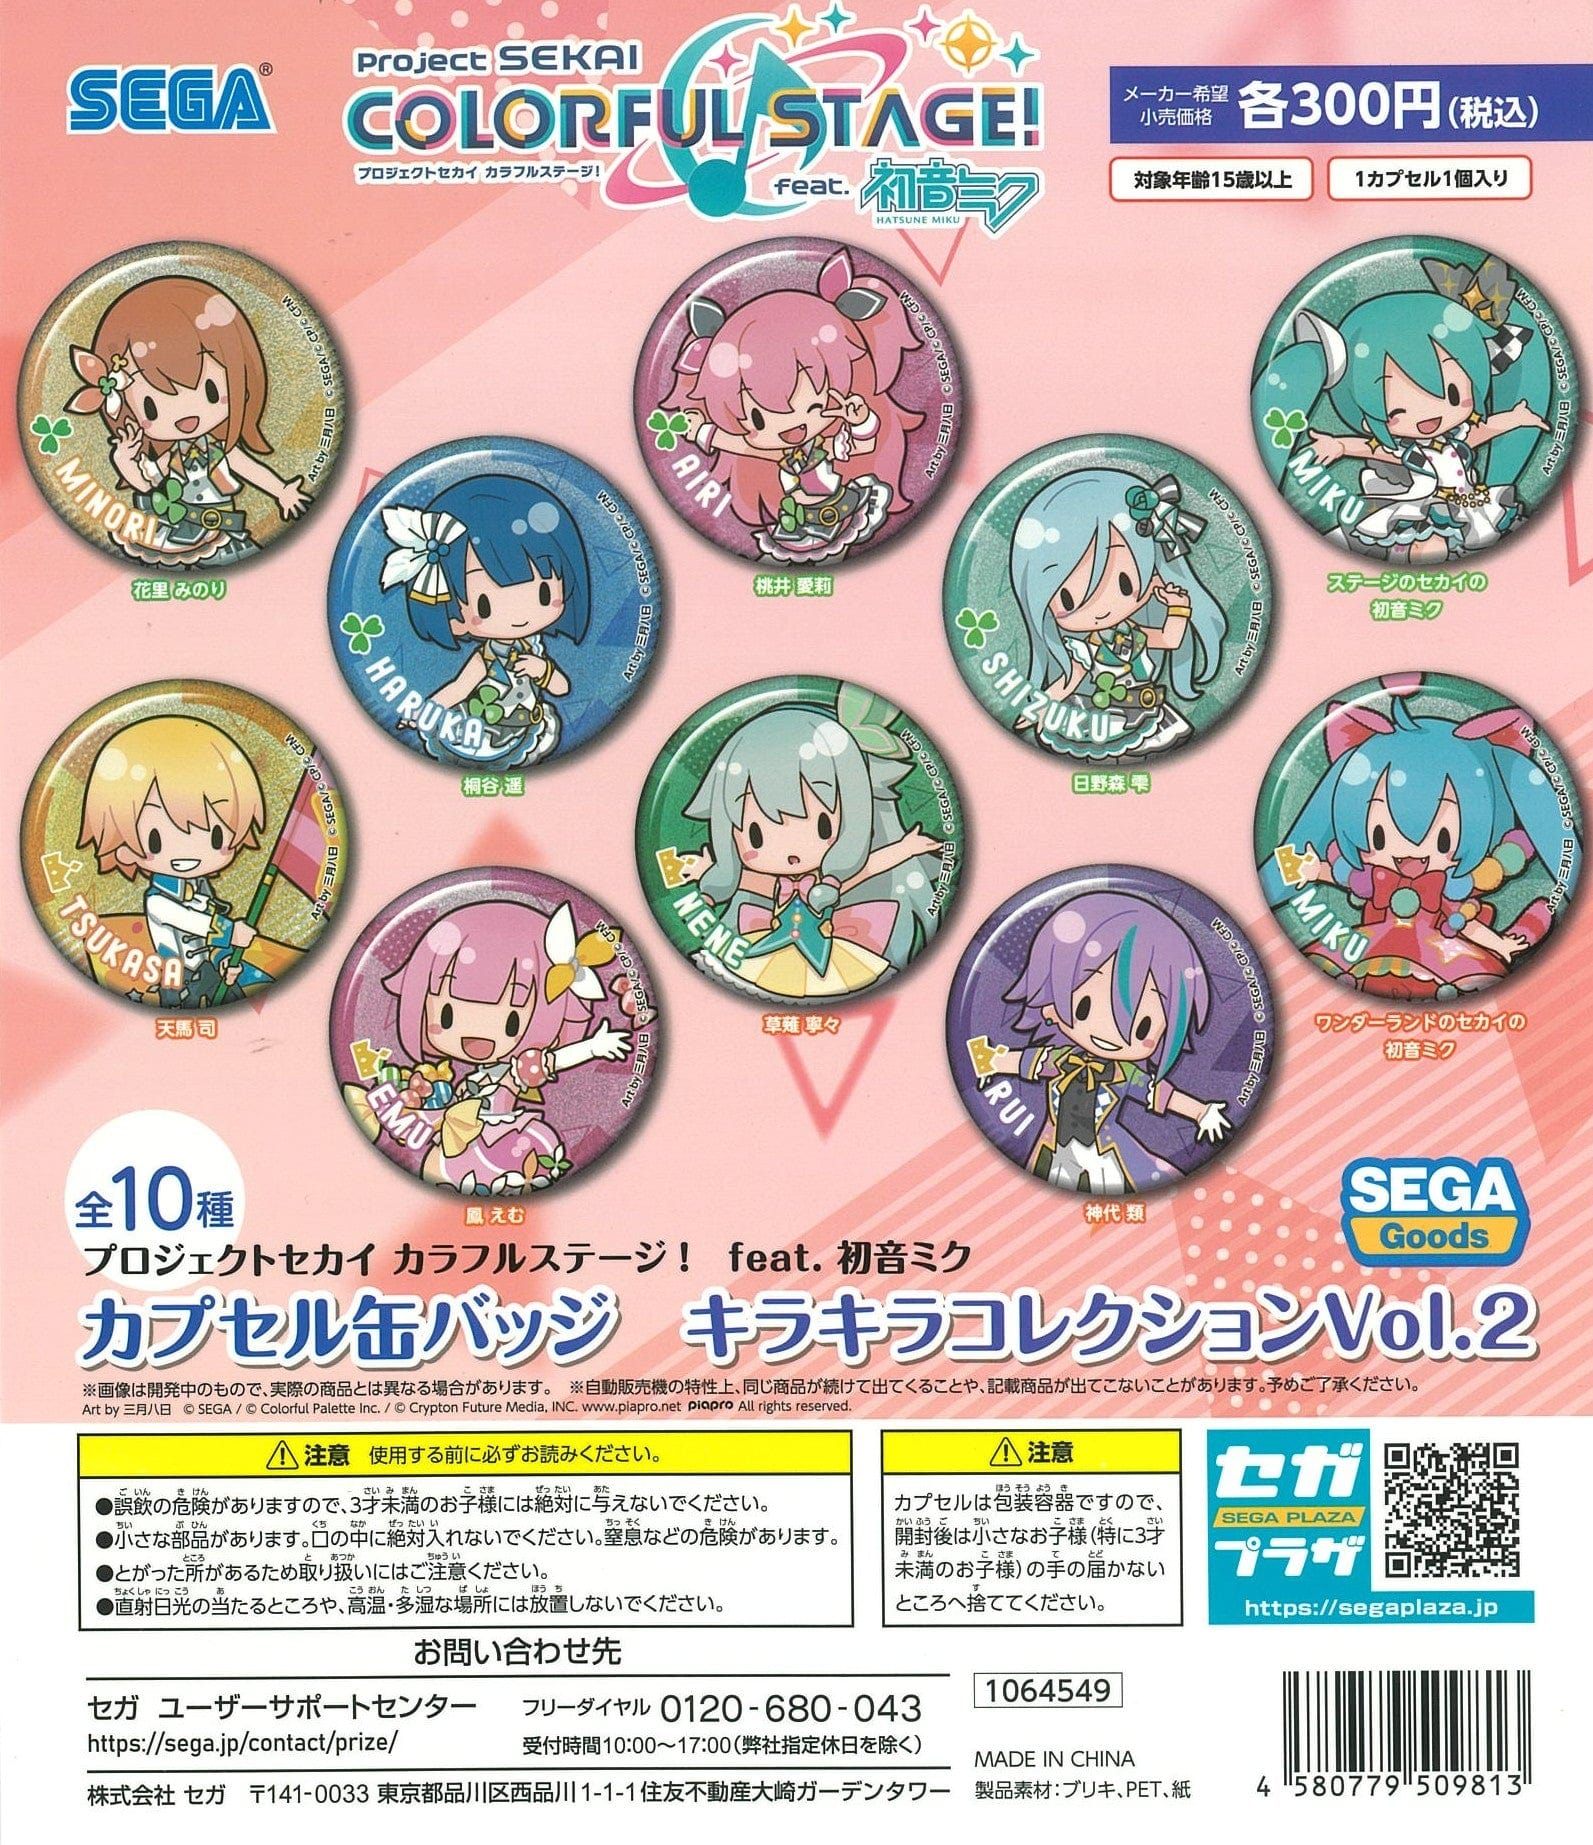 SEGA CP1862 Project SEKAI Colorful Stage feat Hatsune Miku Capsule Can Badge Kirakira Collection Vol 2